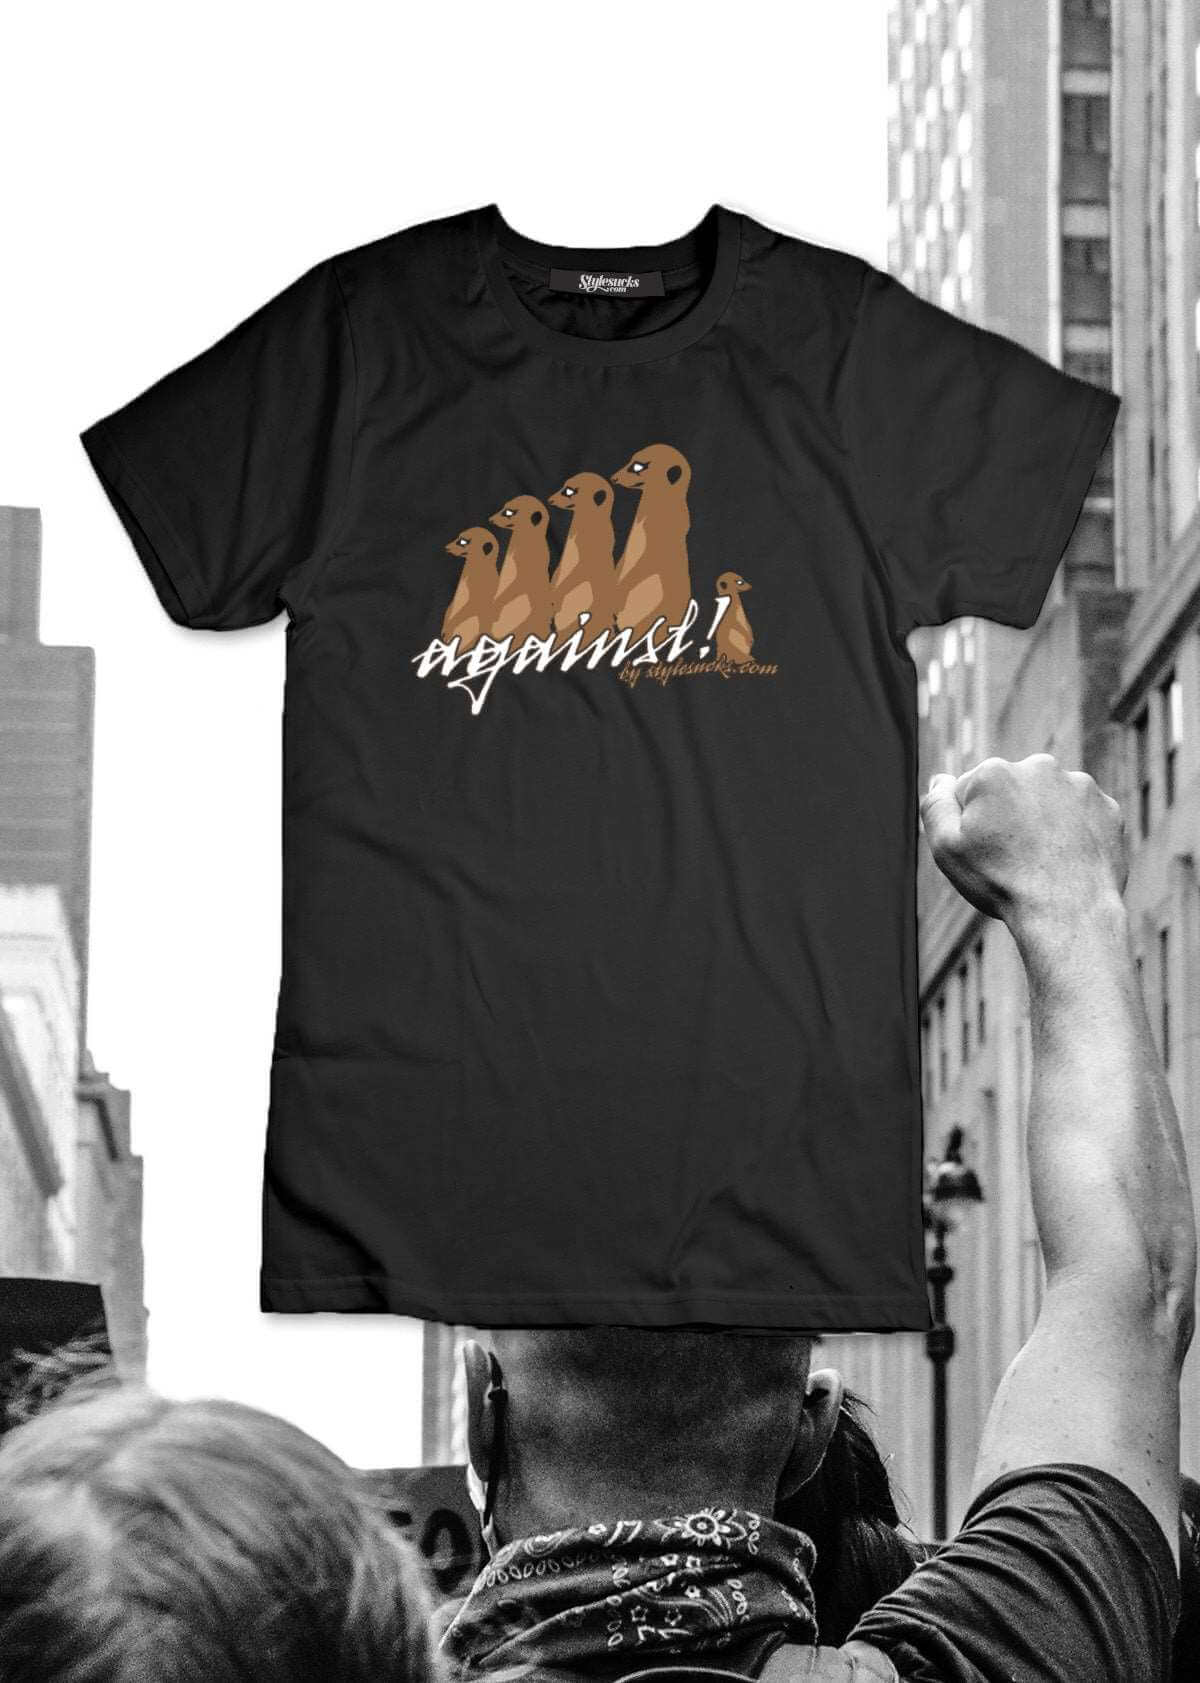 Against! T-Shirt